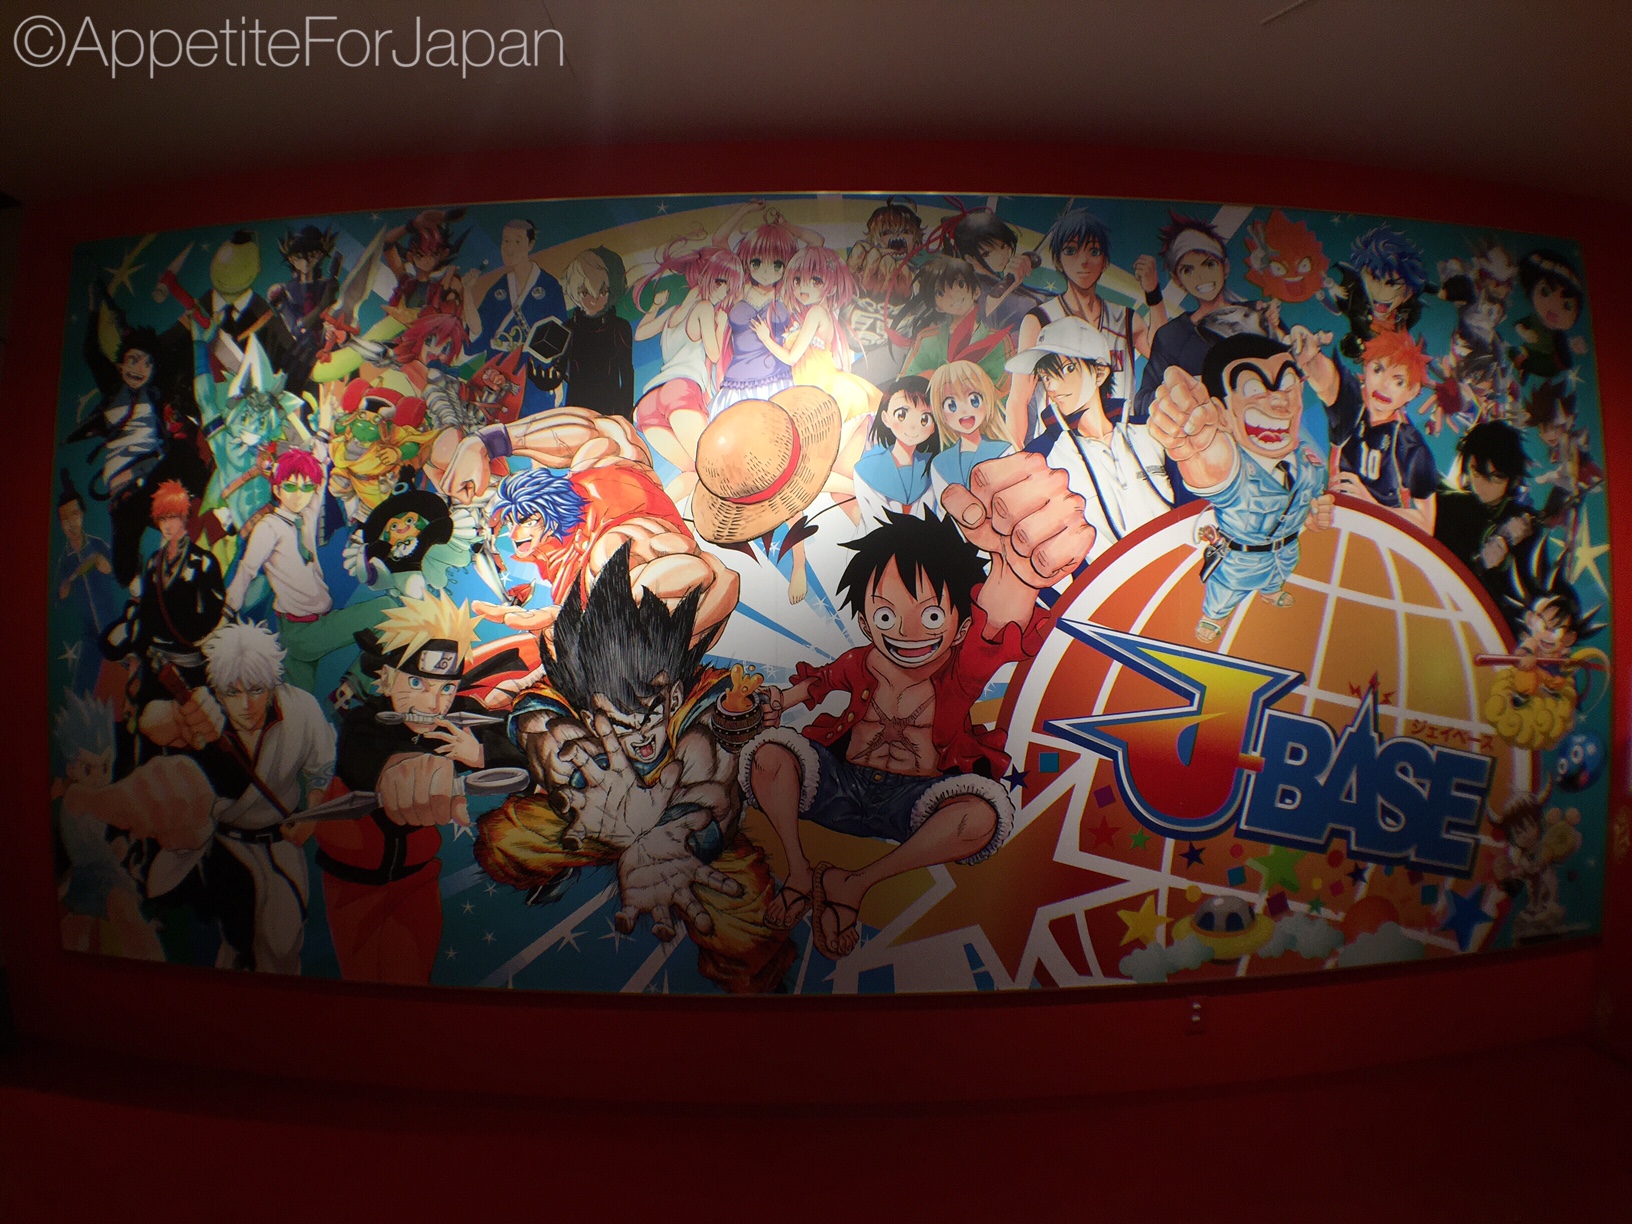 J-World Tokyo: Japan's anime theme park - Appetite For Japan